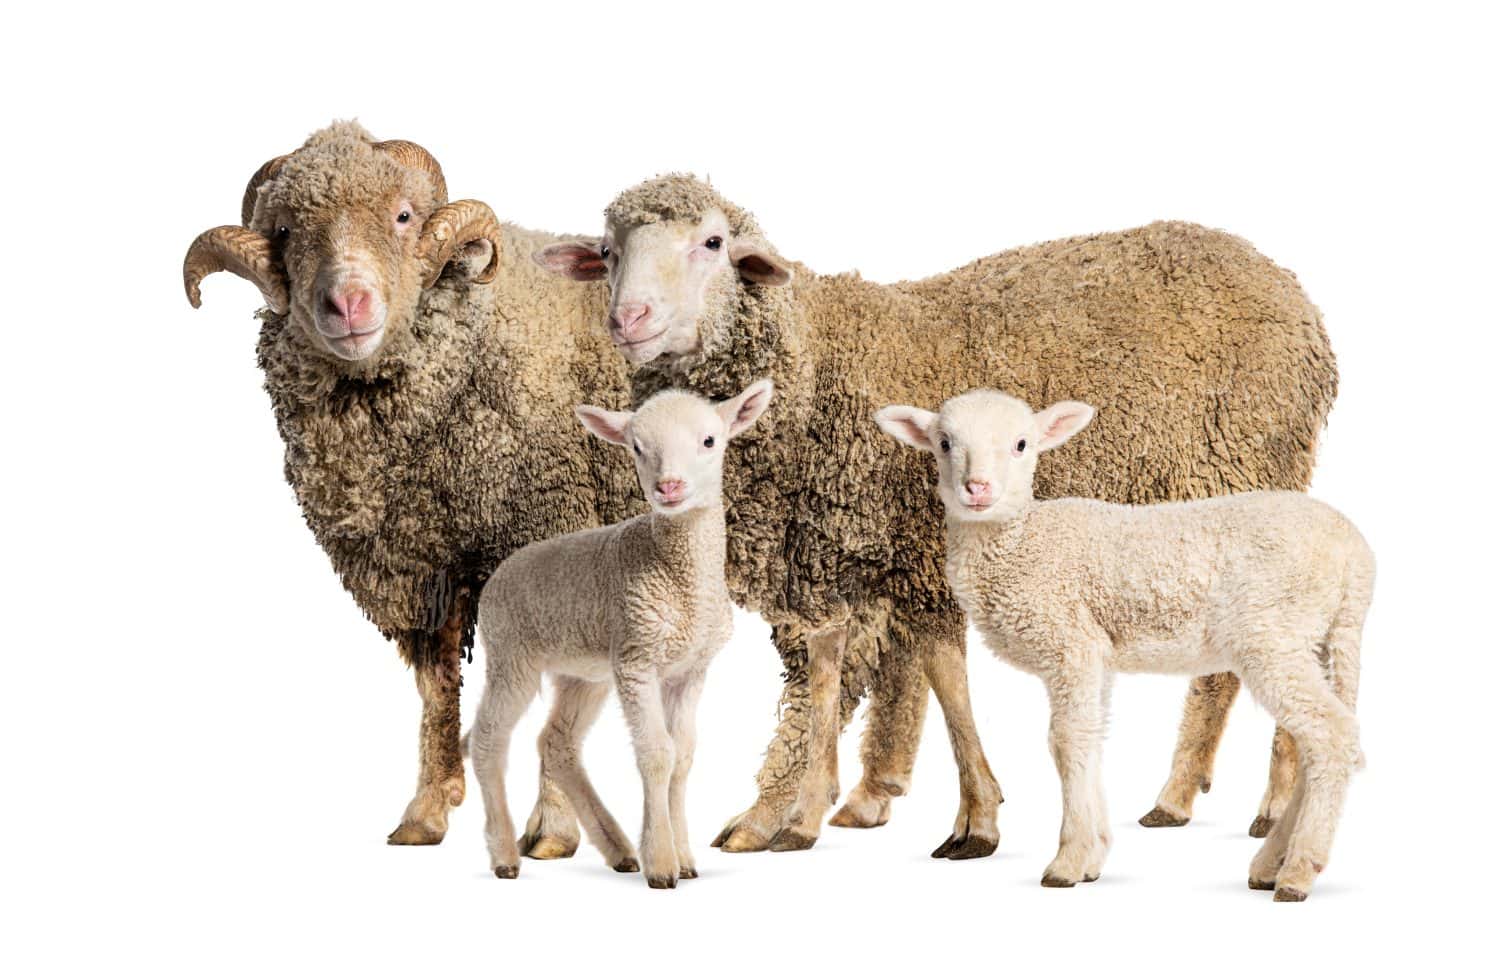 Ram and Ewe Sopravissana sheep with her lambs, isolated on white